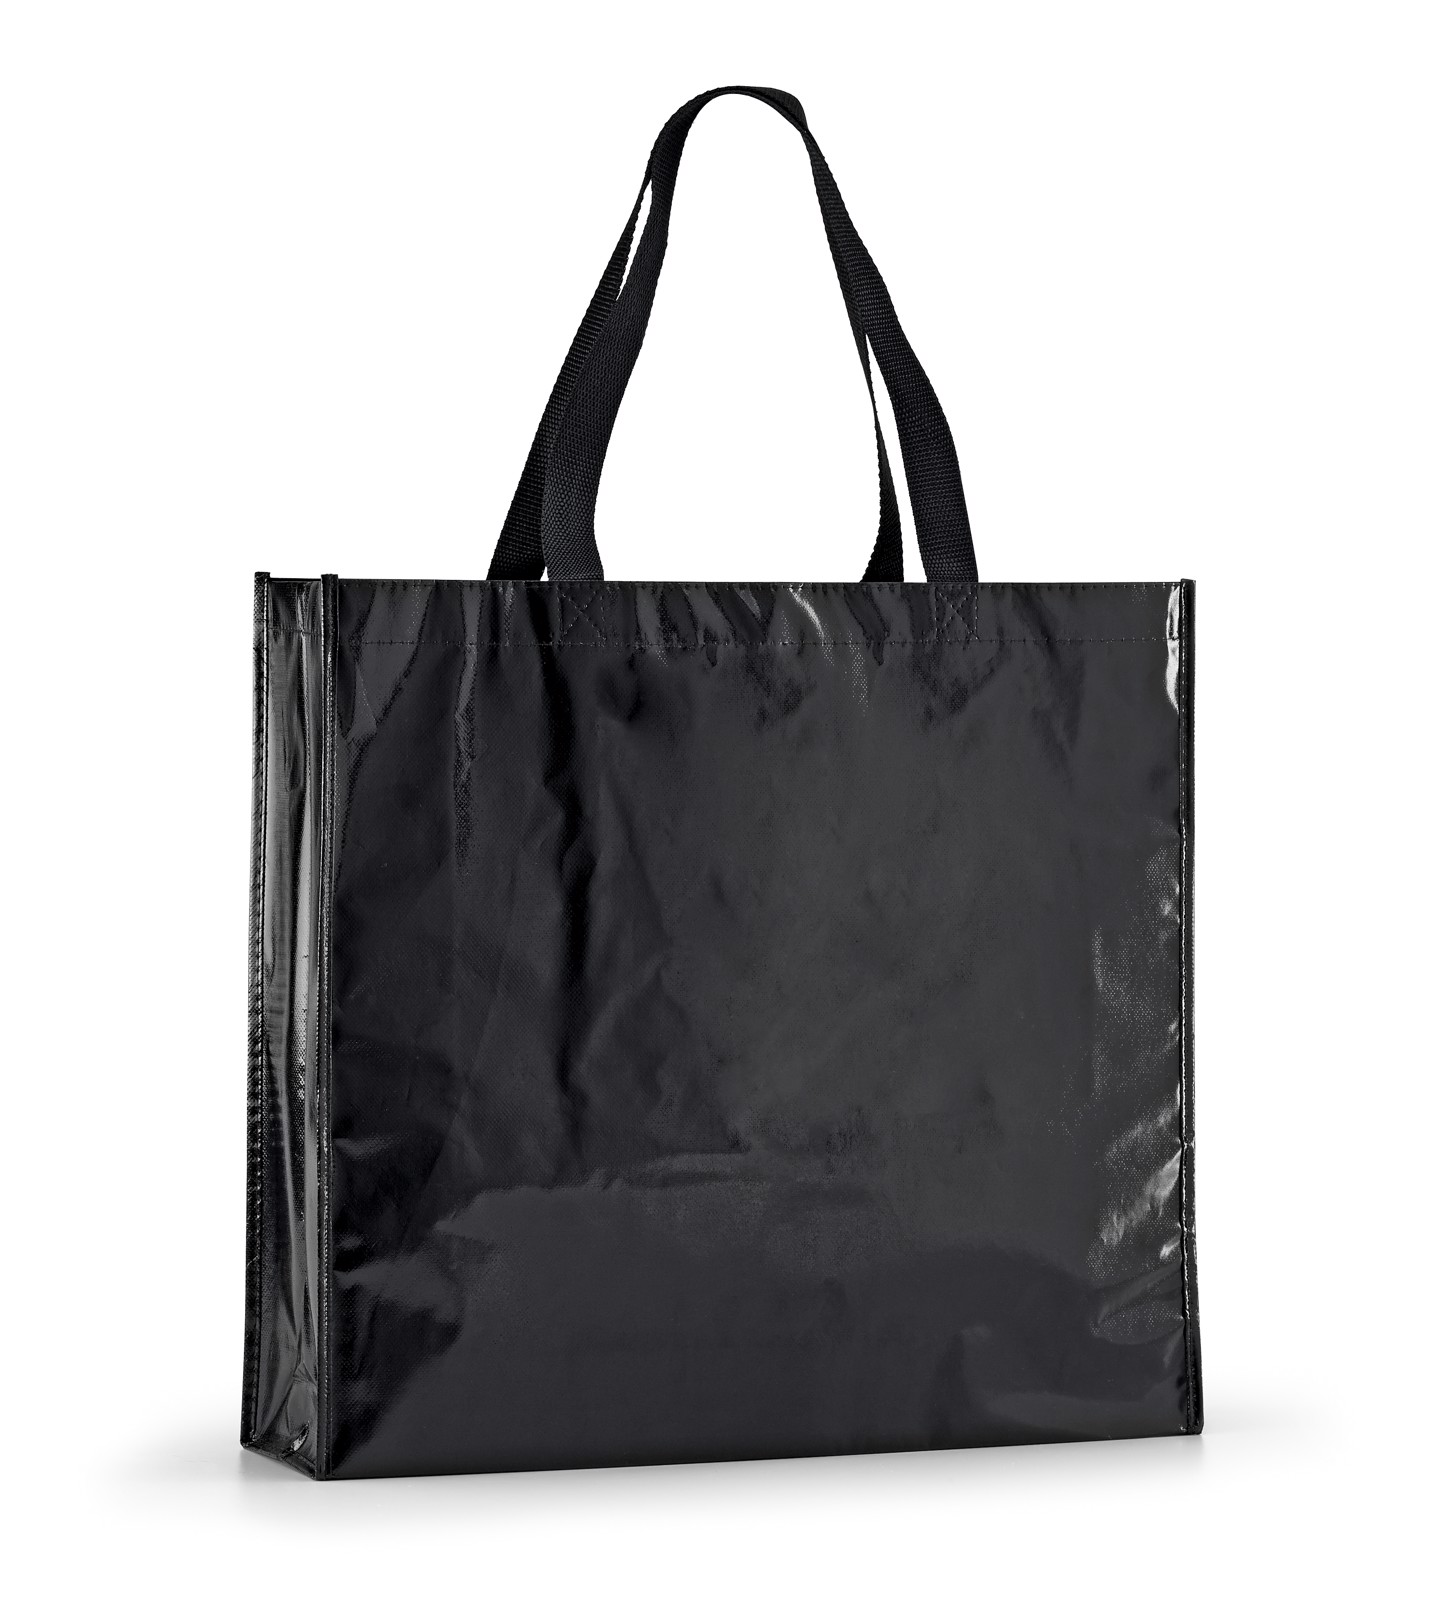 WESTFIELD. Laminated non-woven bag - Black